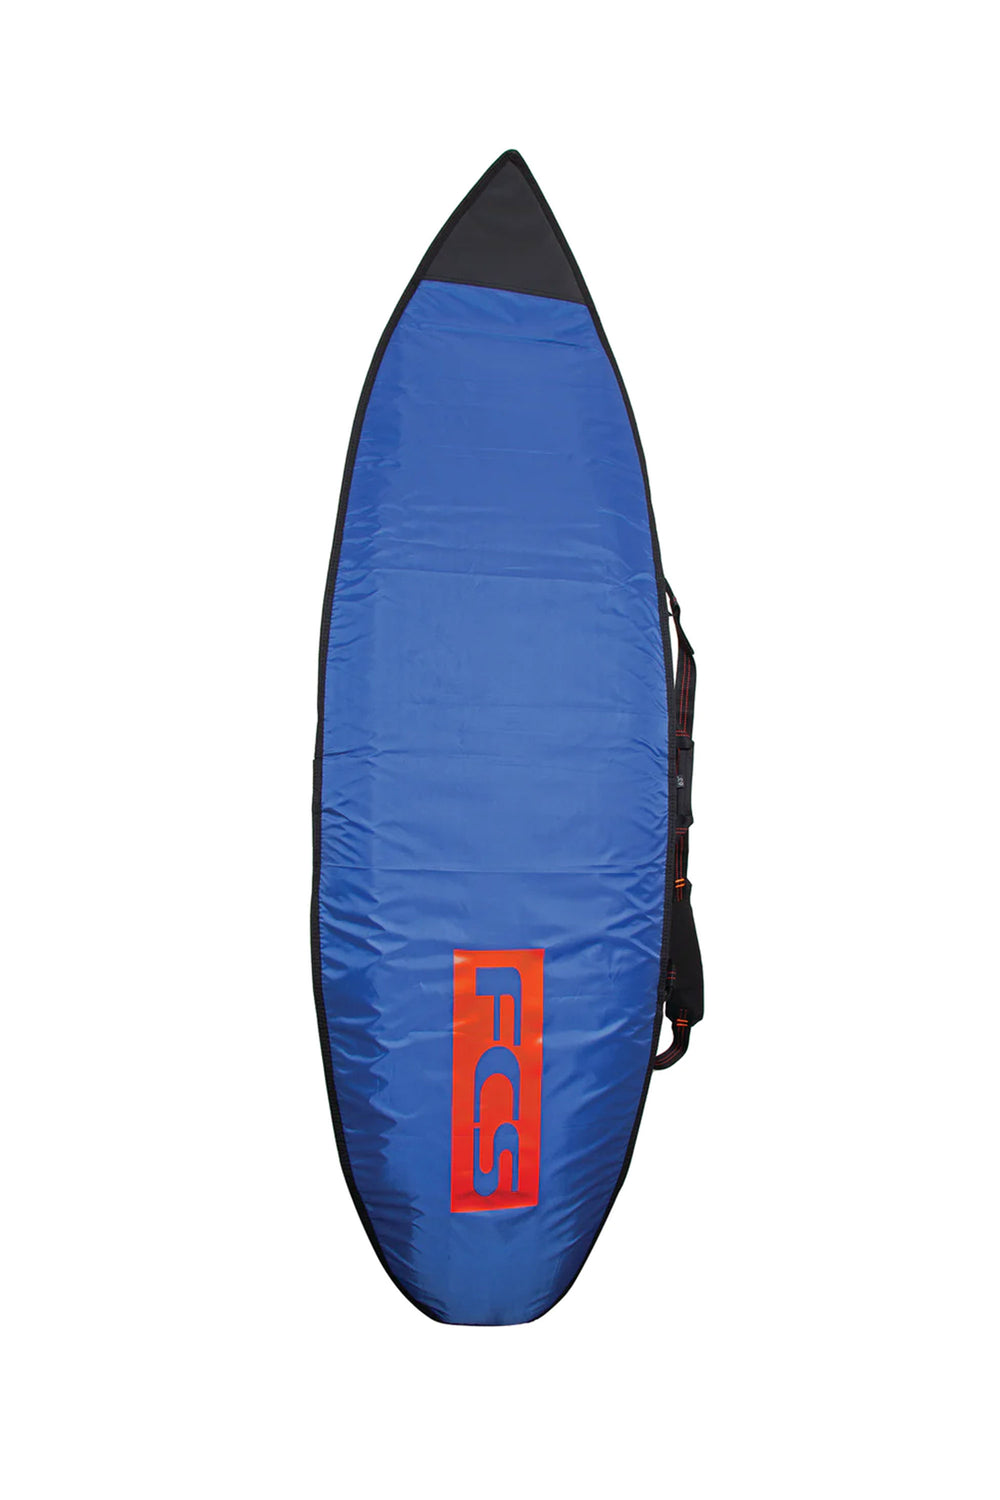     Pukas-Surf-Shop-fcs-boardbags-7.0-classic-fun-board-blue